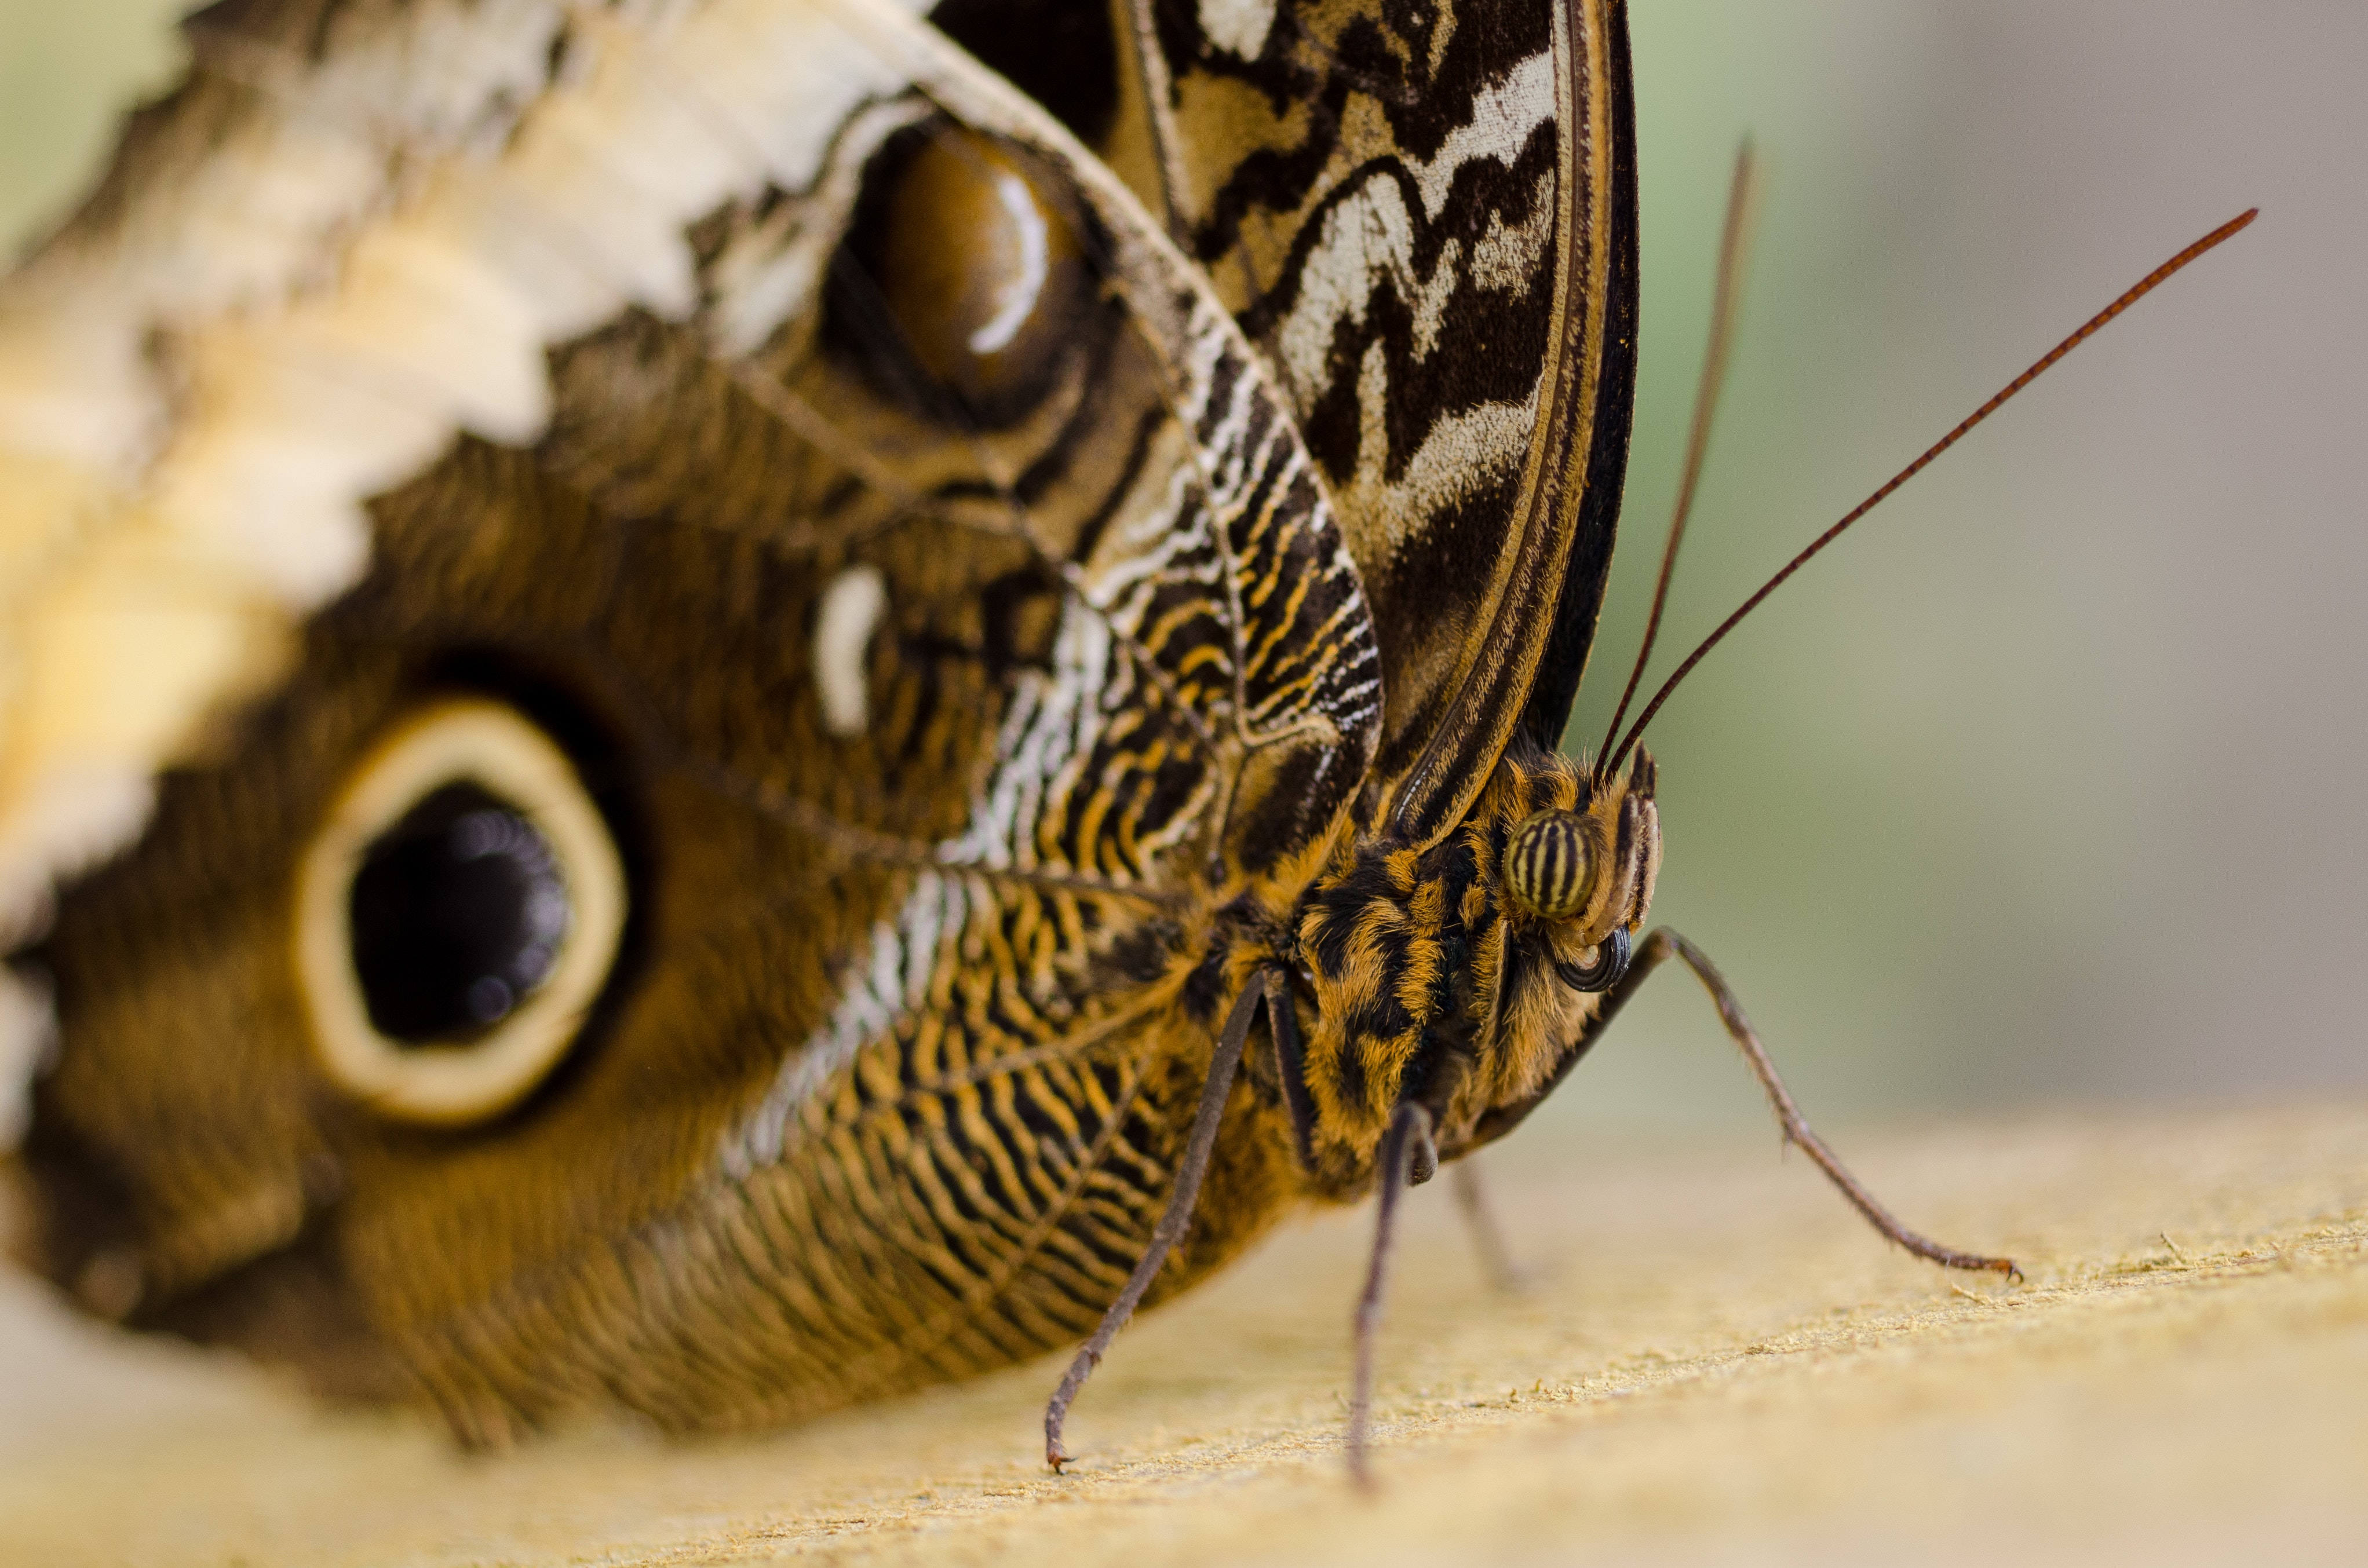 Monarch butterfly closeup images, stock photos vectors